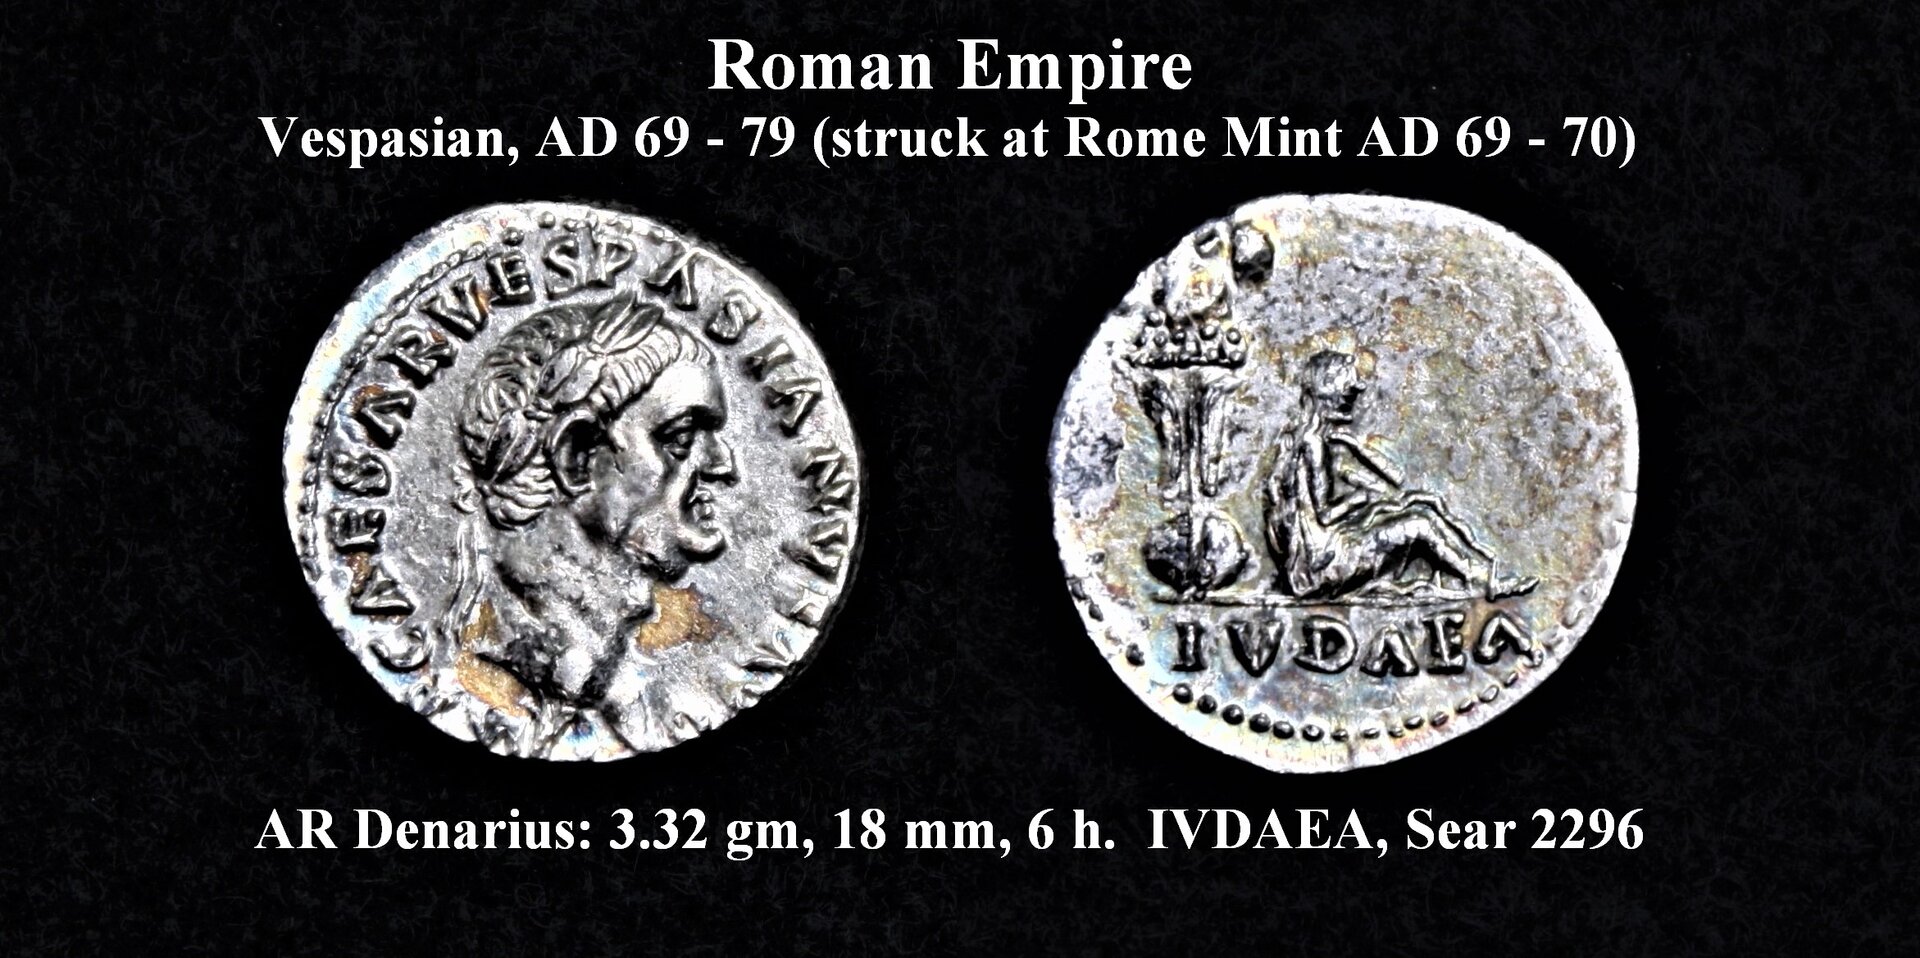 Judaea Victory Denarius, Sear 2296 (2).jpg